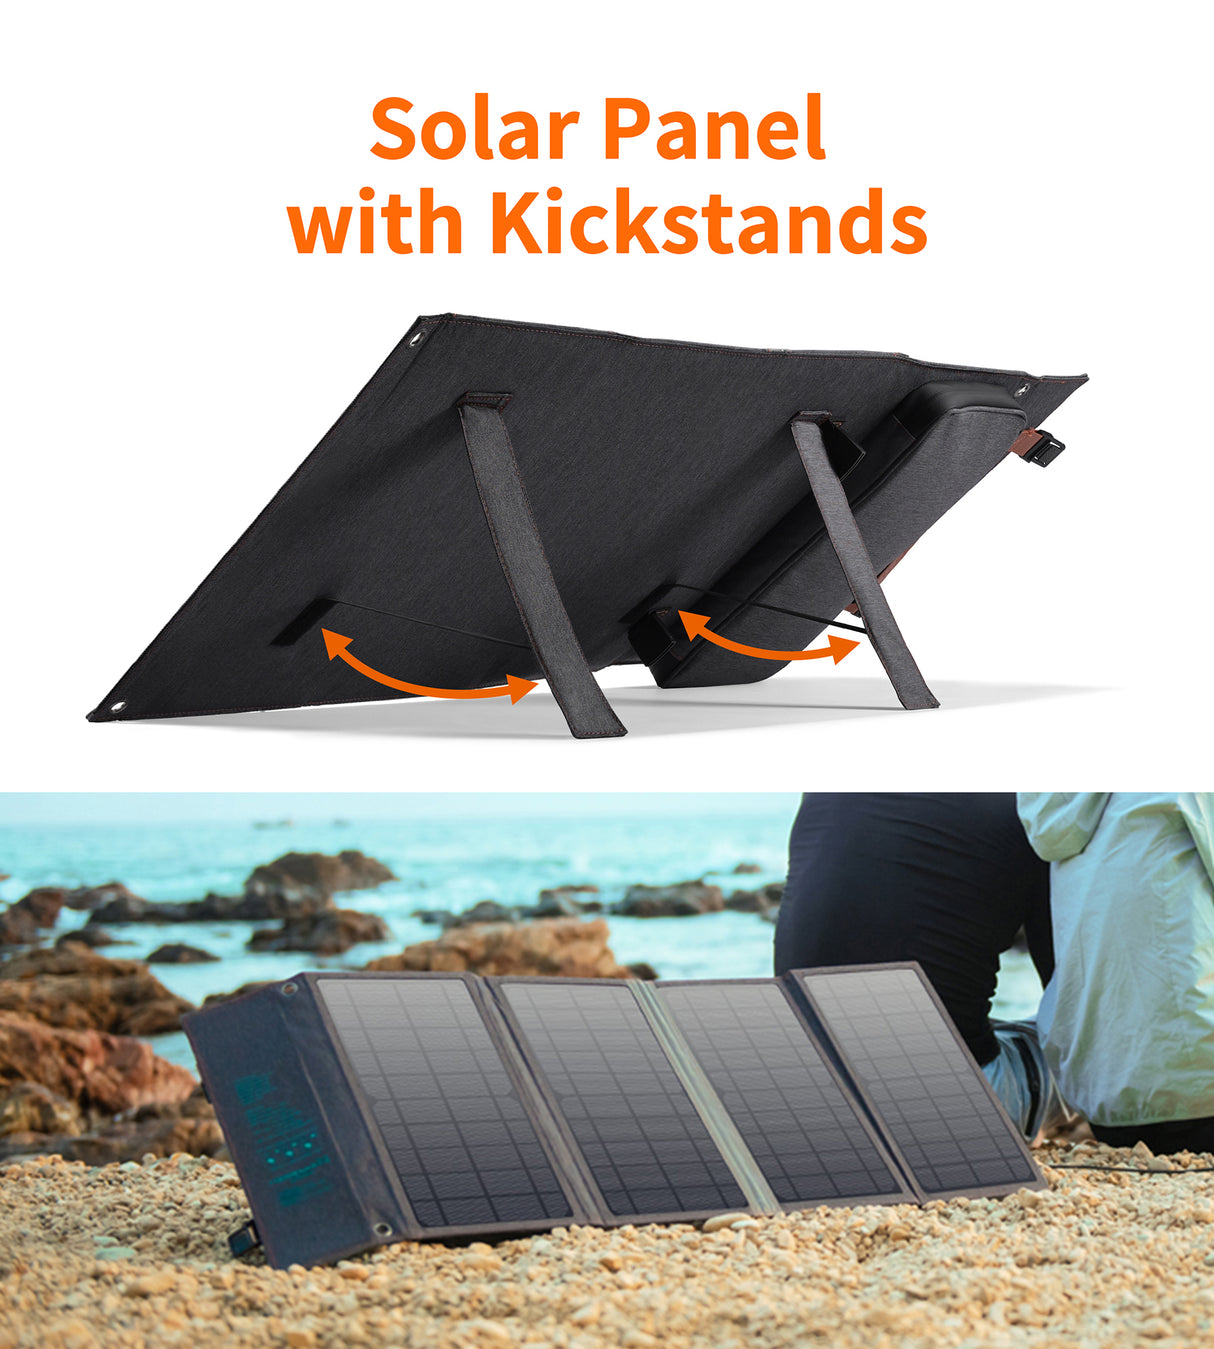 Choetech Tragbares Solarladegerät 36W Faltbares Solarladegerät SC006